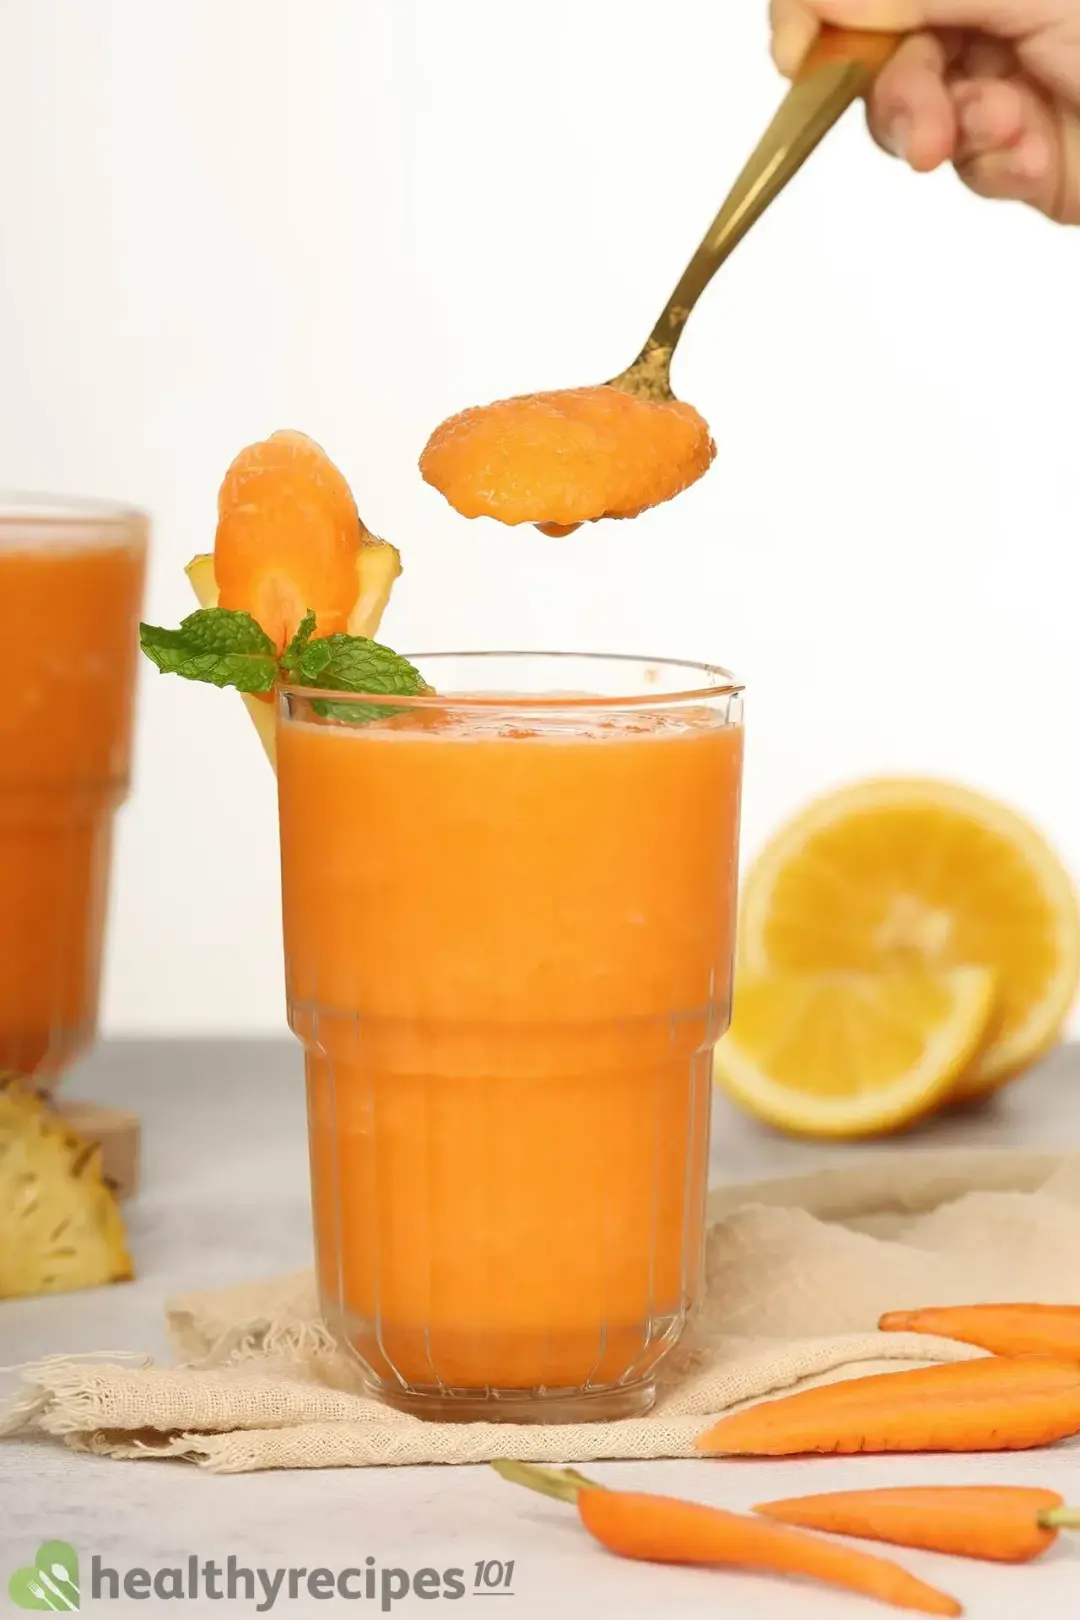 Carrot Smoothie Recipe